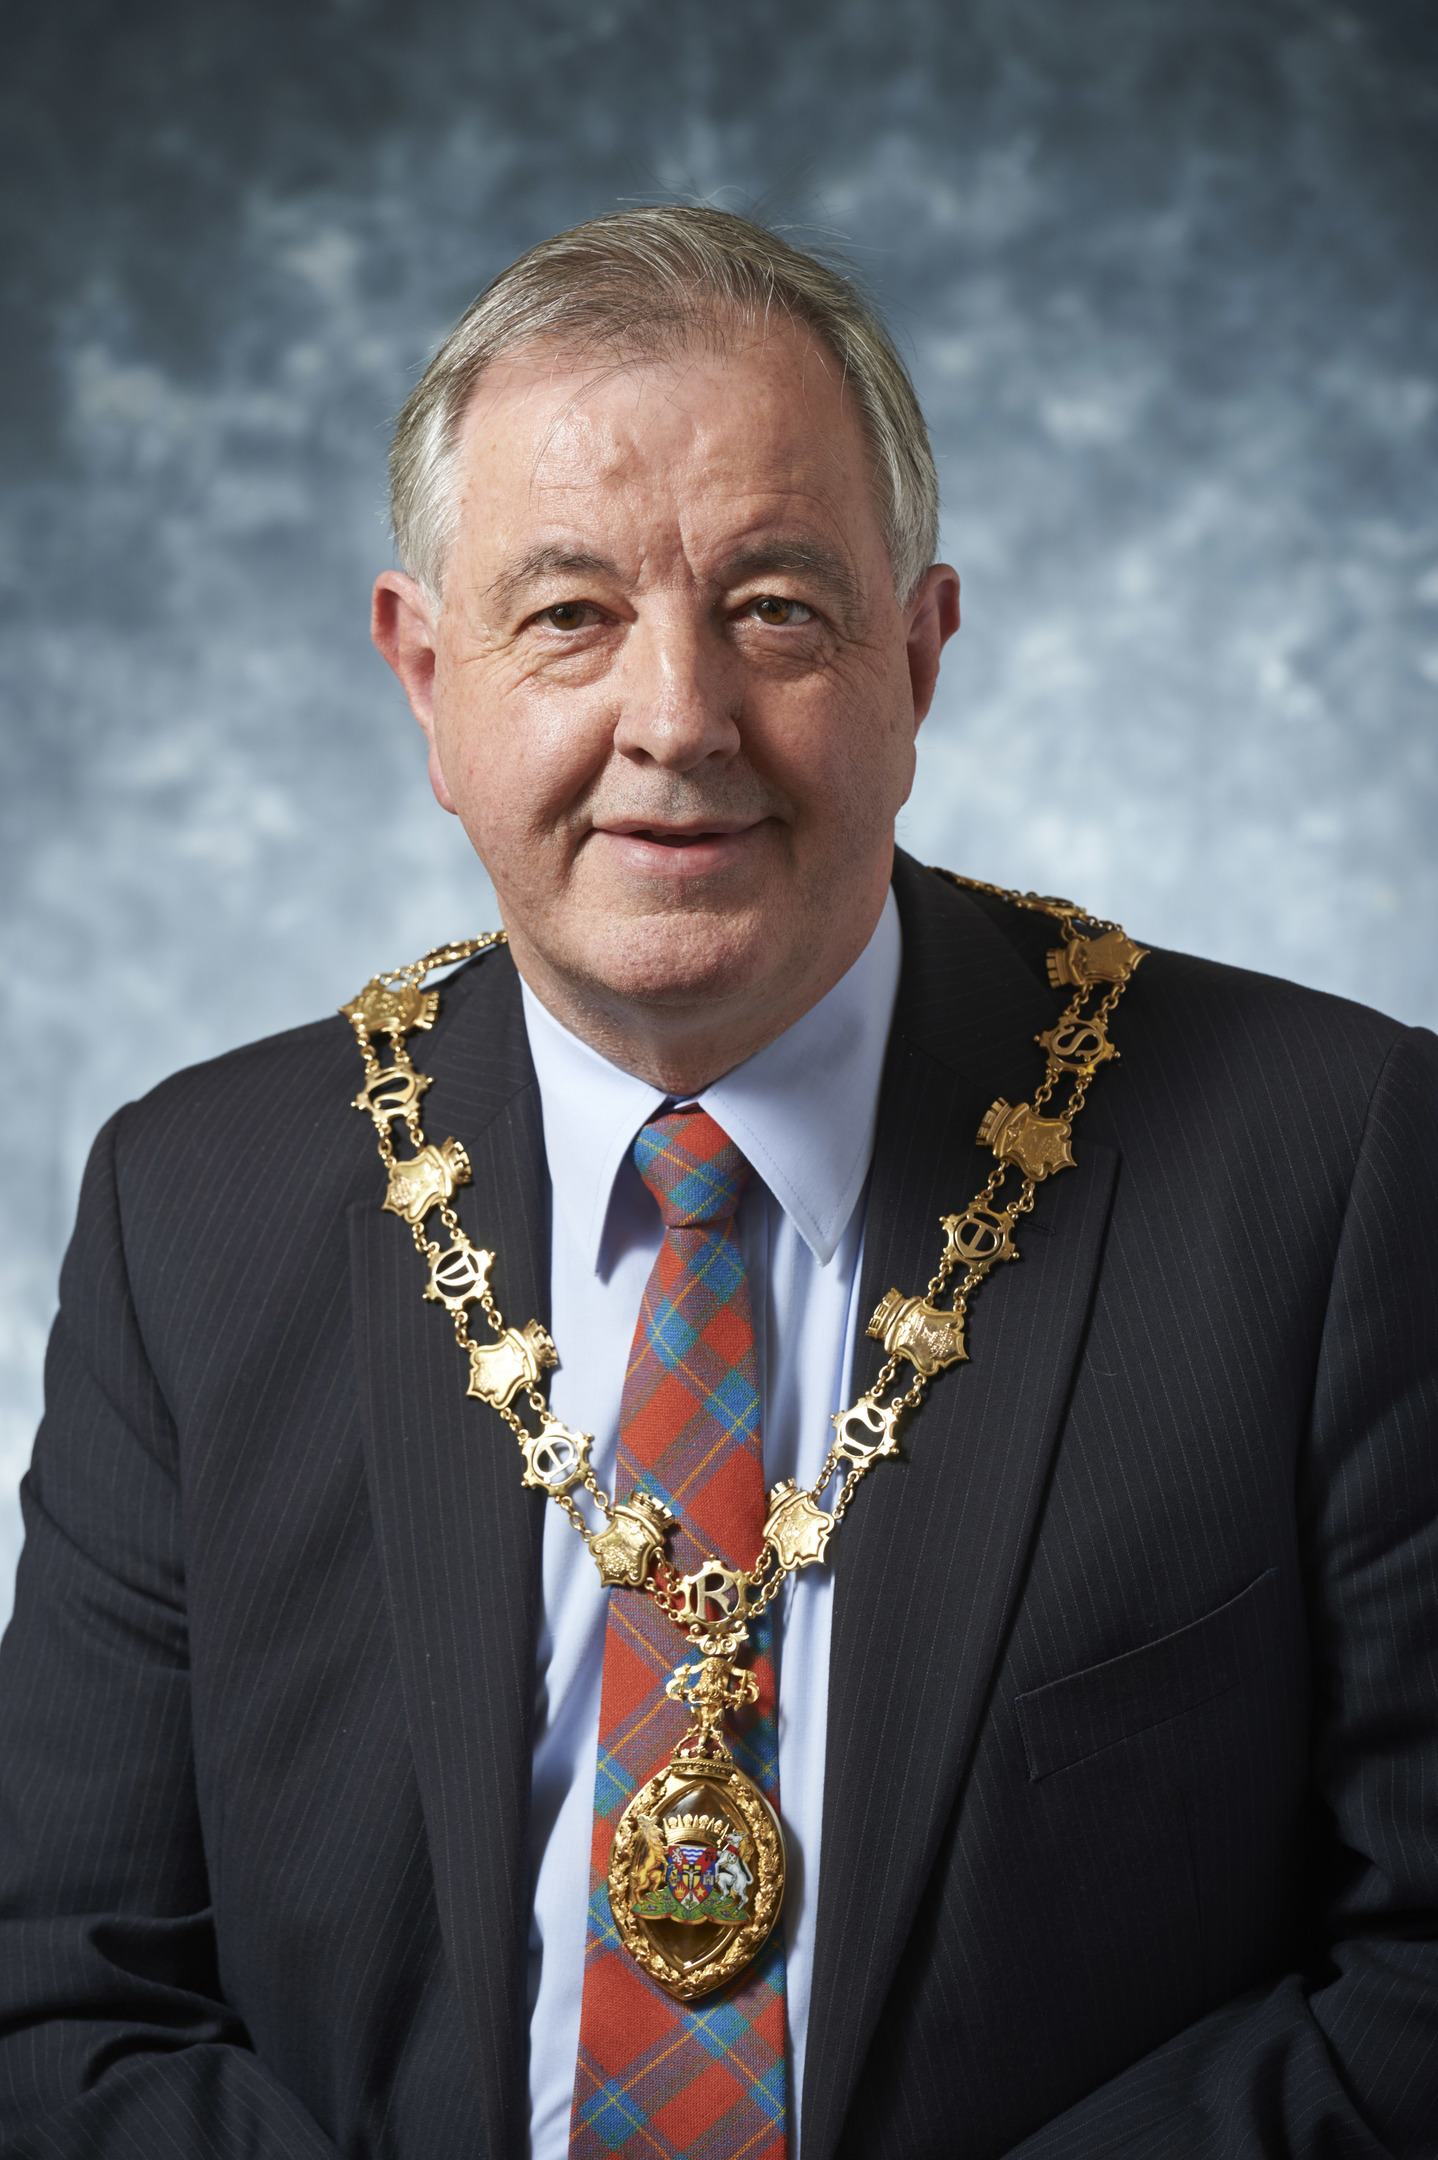 City provost Alex Graham